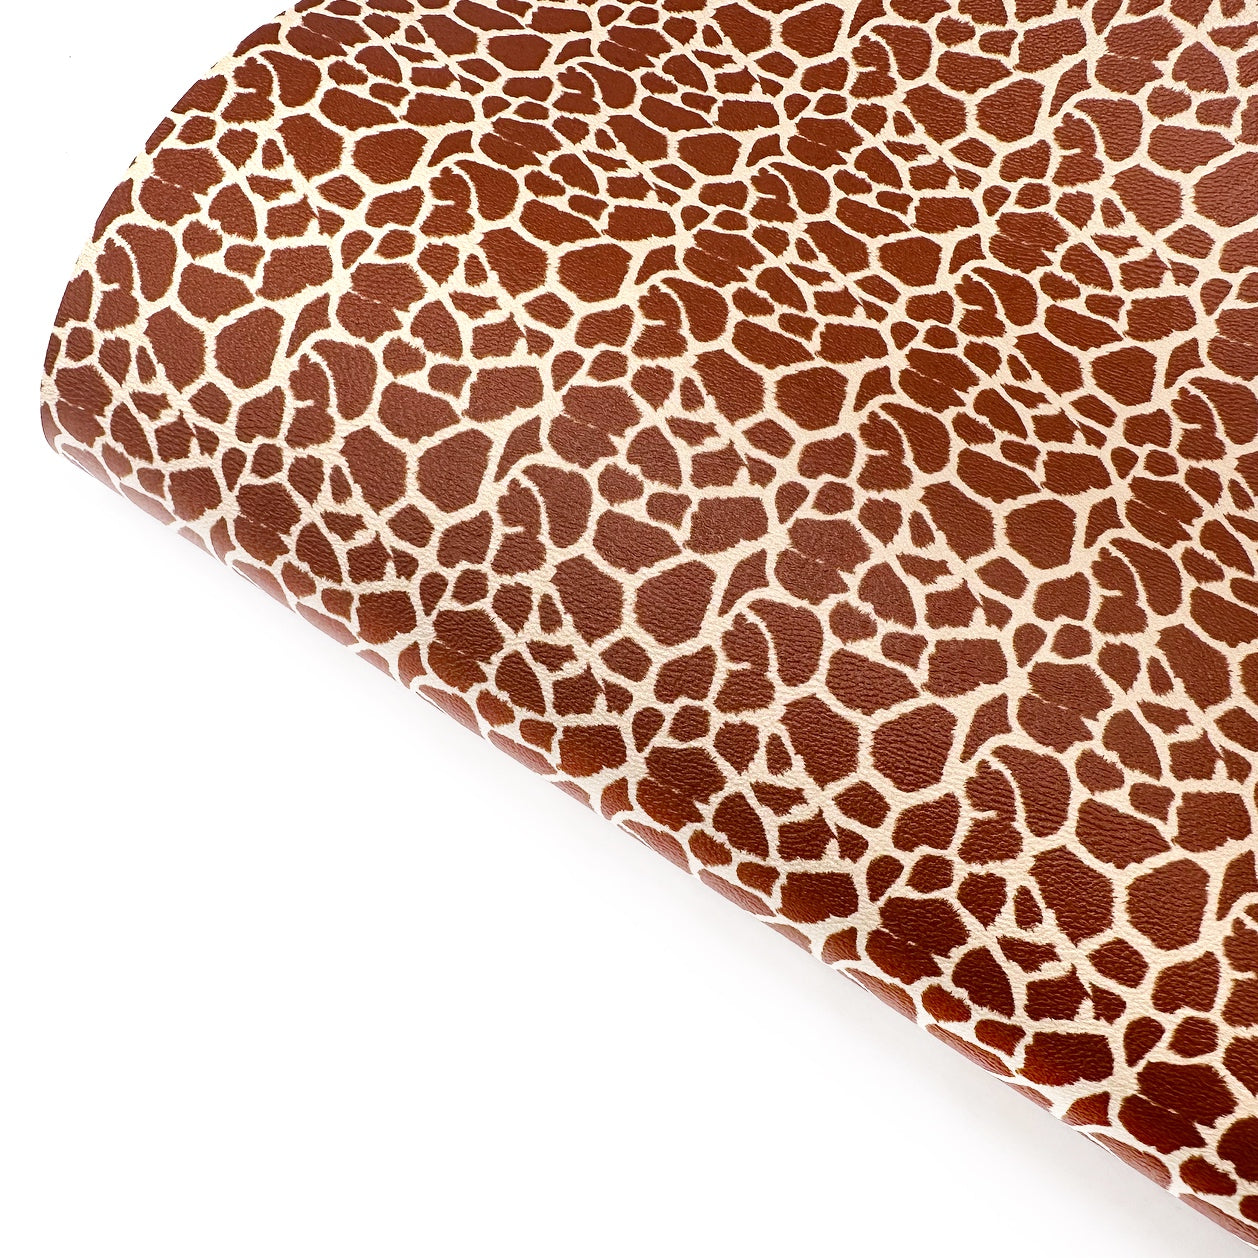 Little Giraffe Print Premium Faux Leather Fabric Sheets